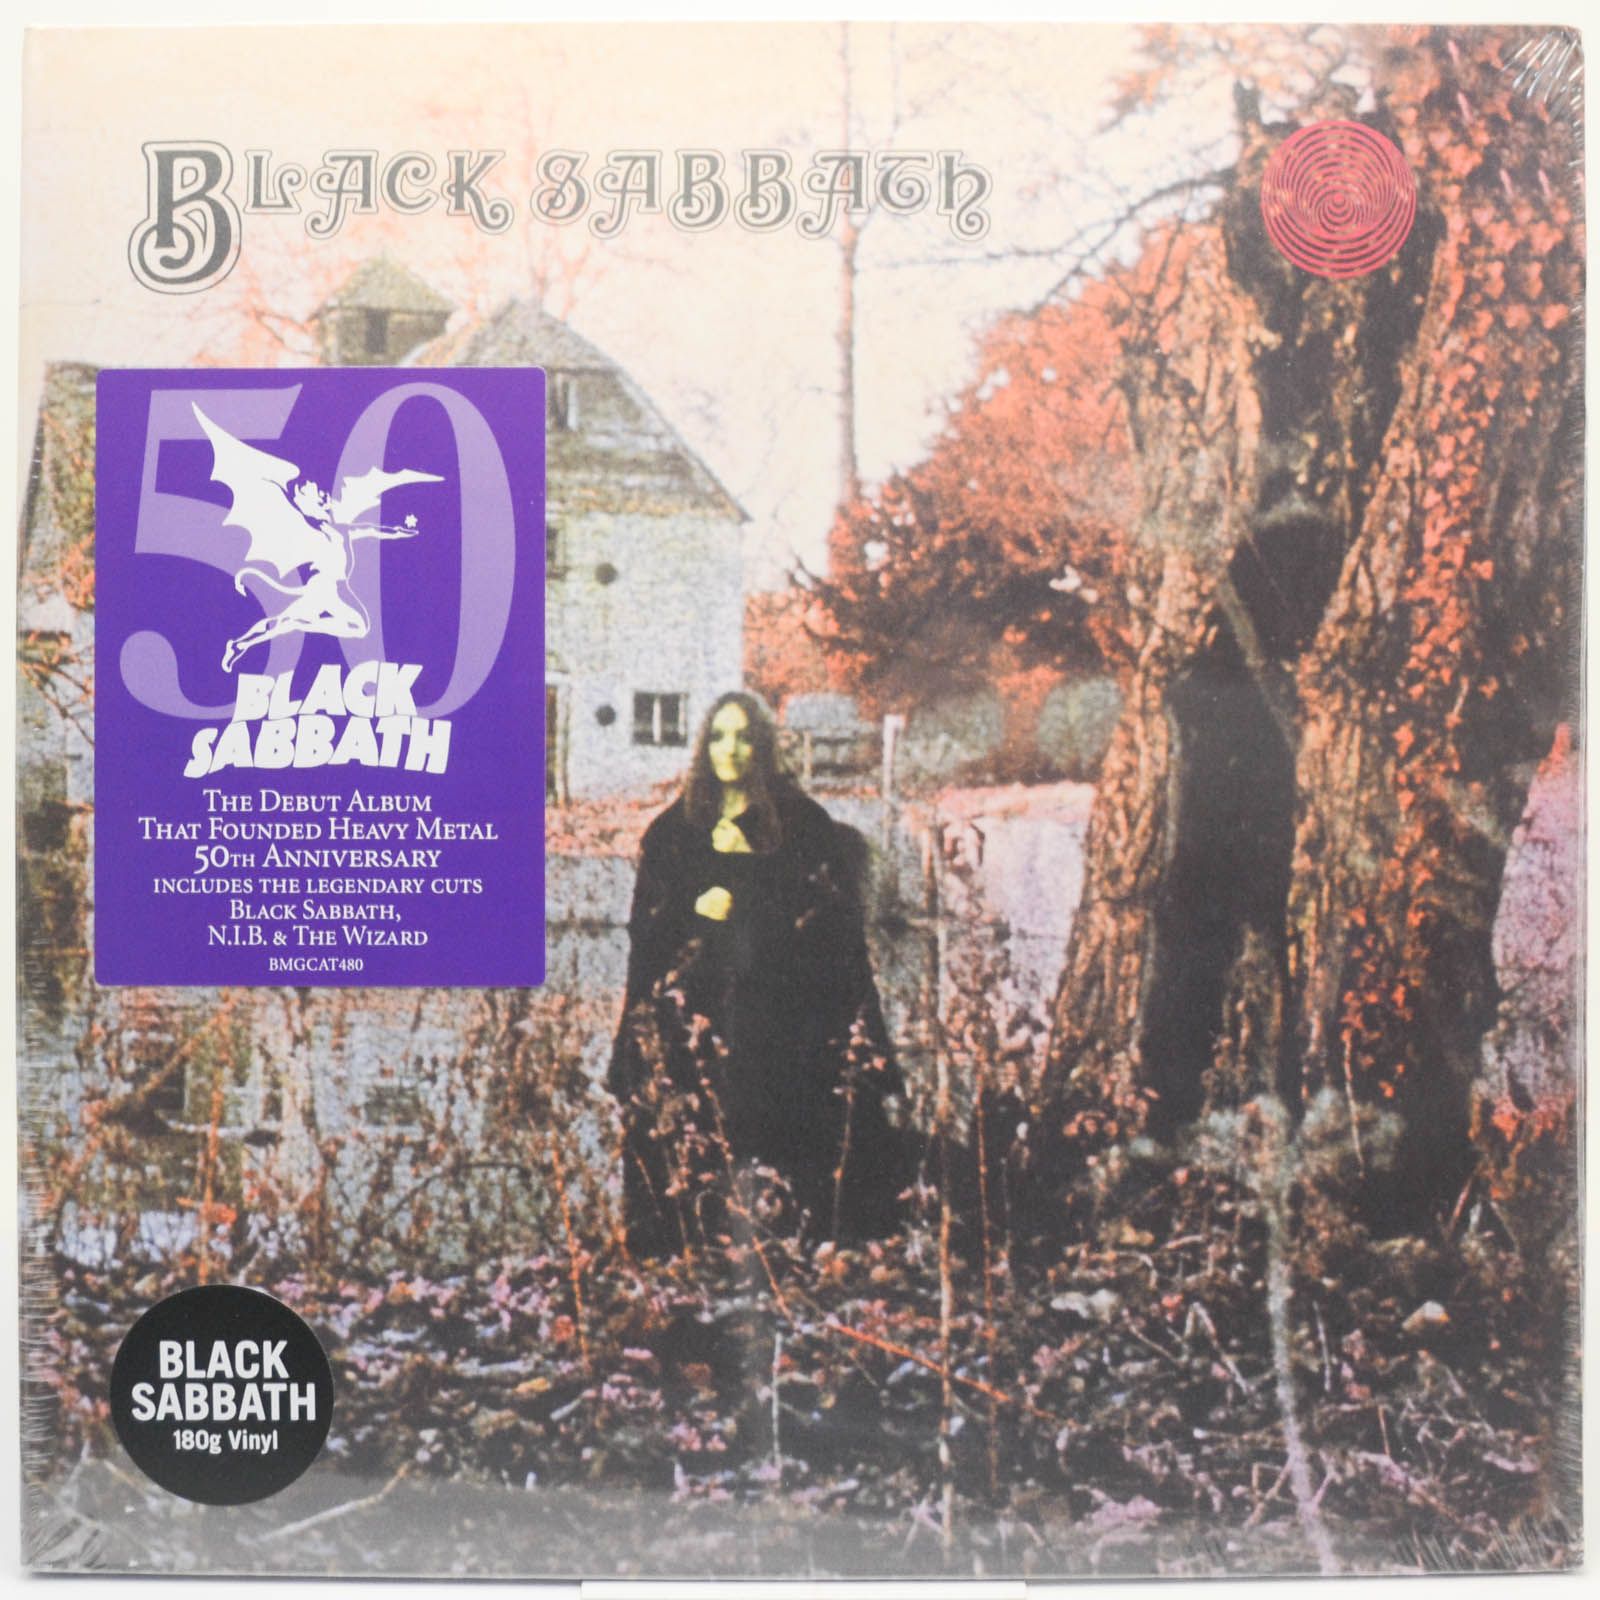 Black Sabbath — Black Sabbath, 1970